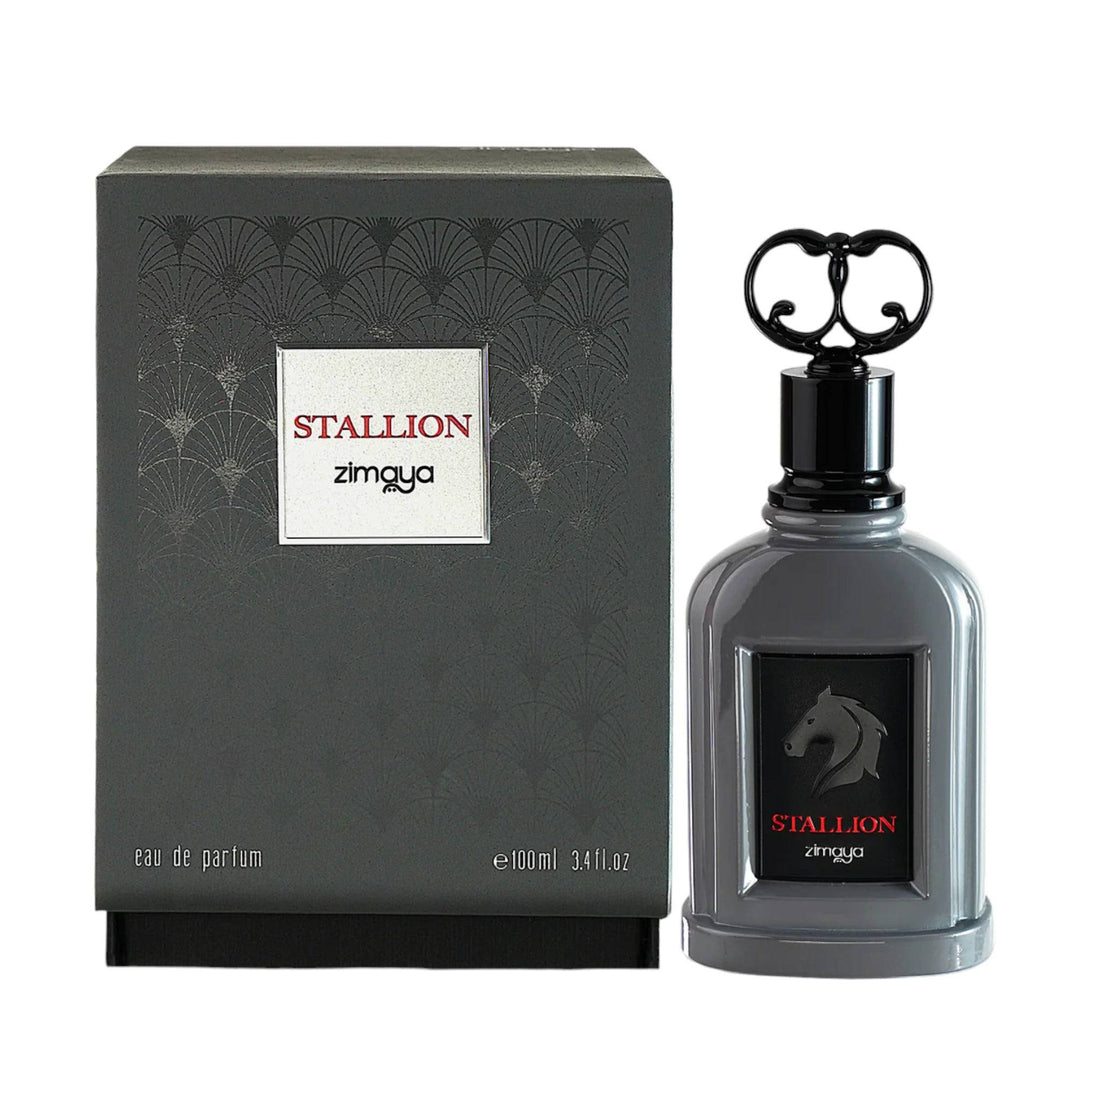 Sleek 100ml bottle of Zimaya Stallion Eau De Parfum, capturing the fragrance's bold and masculine character.